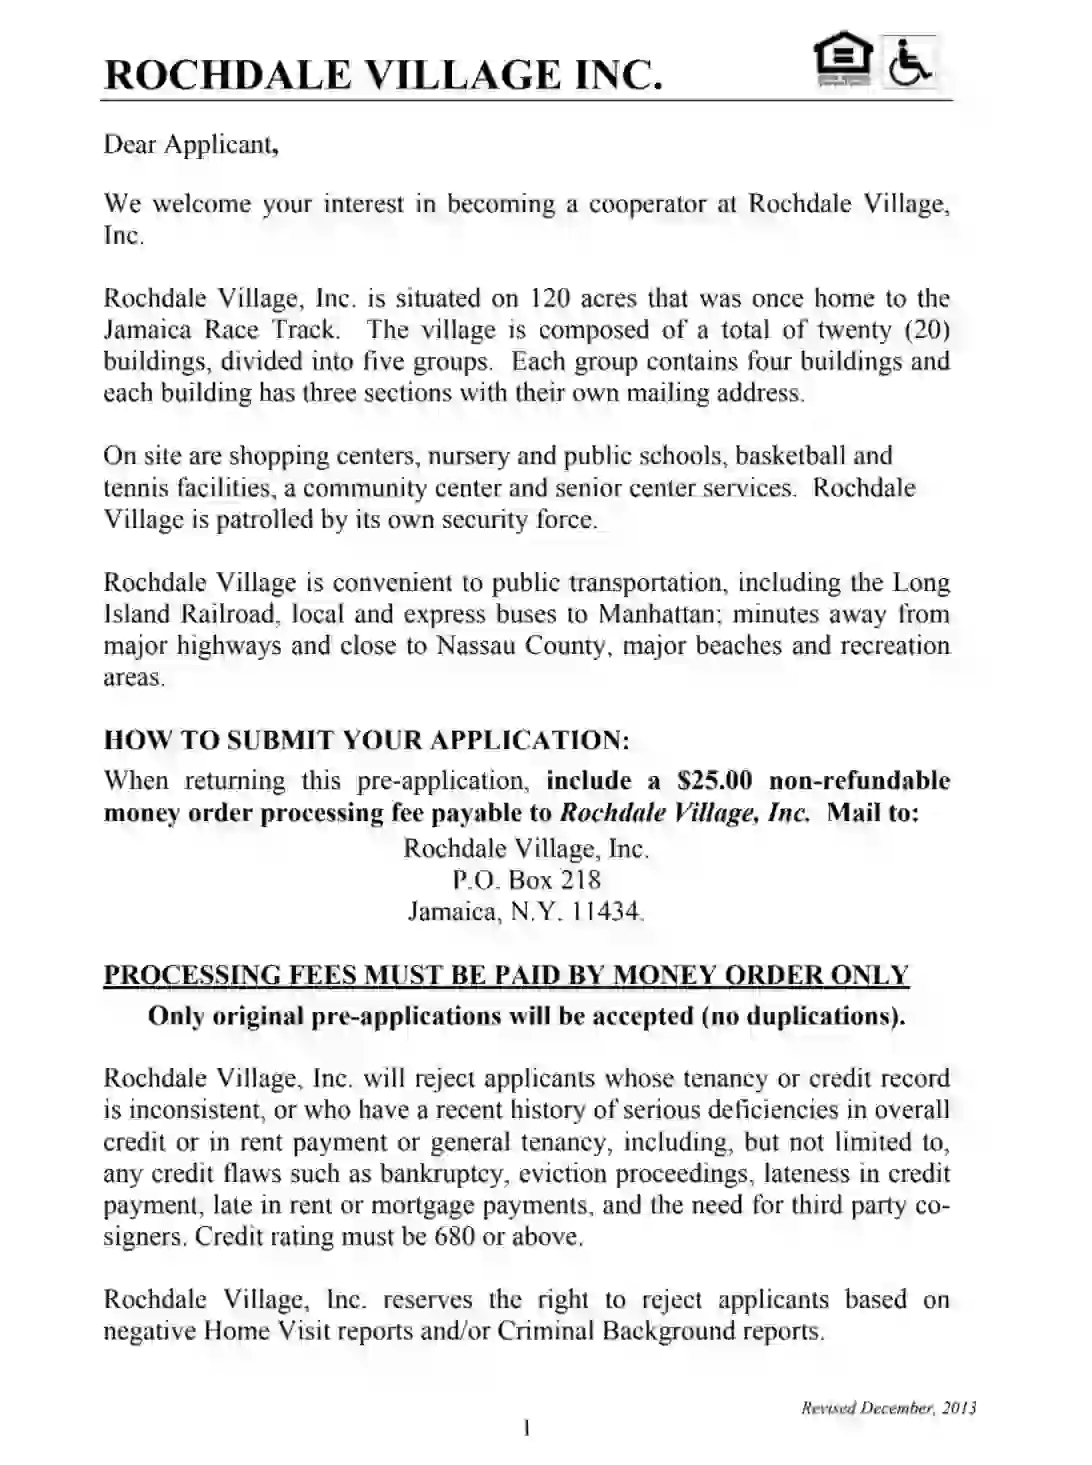 rochdale village application